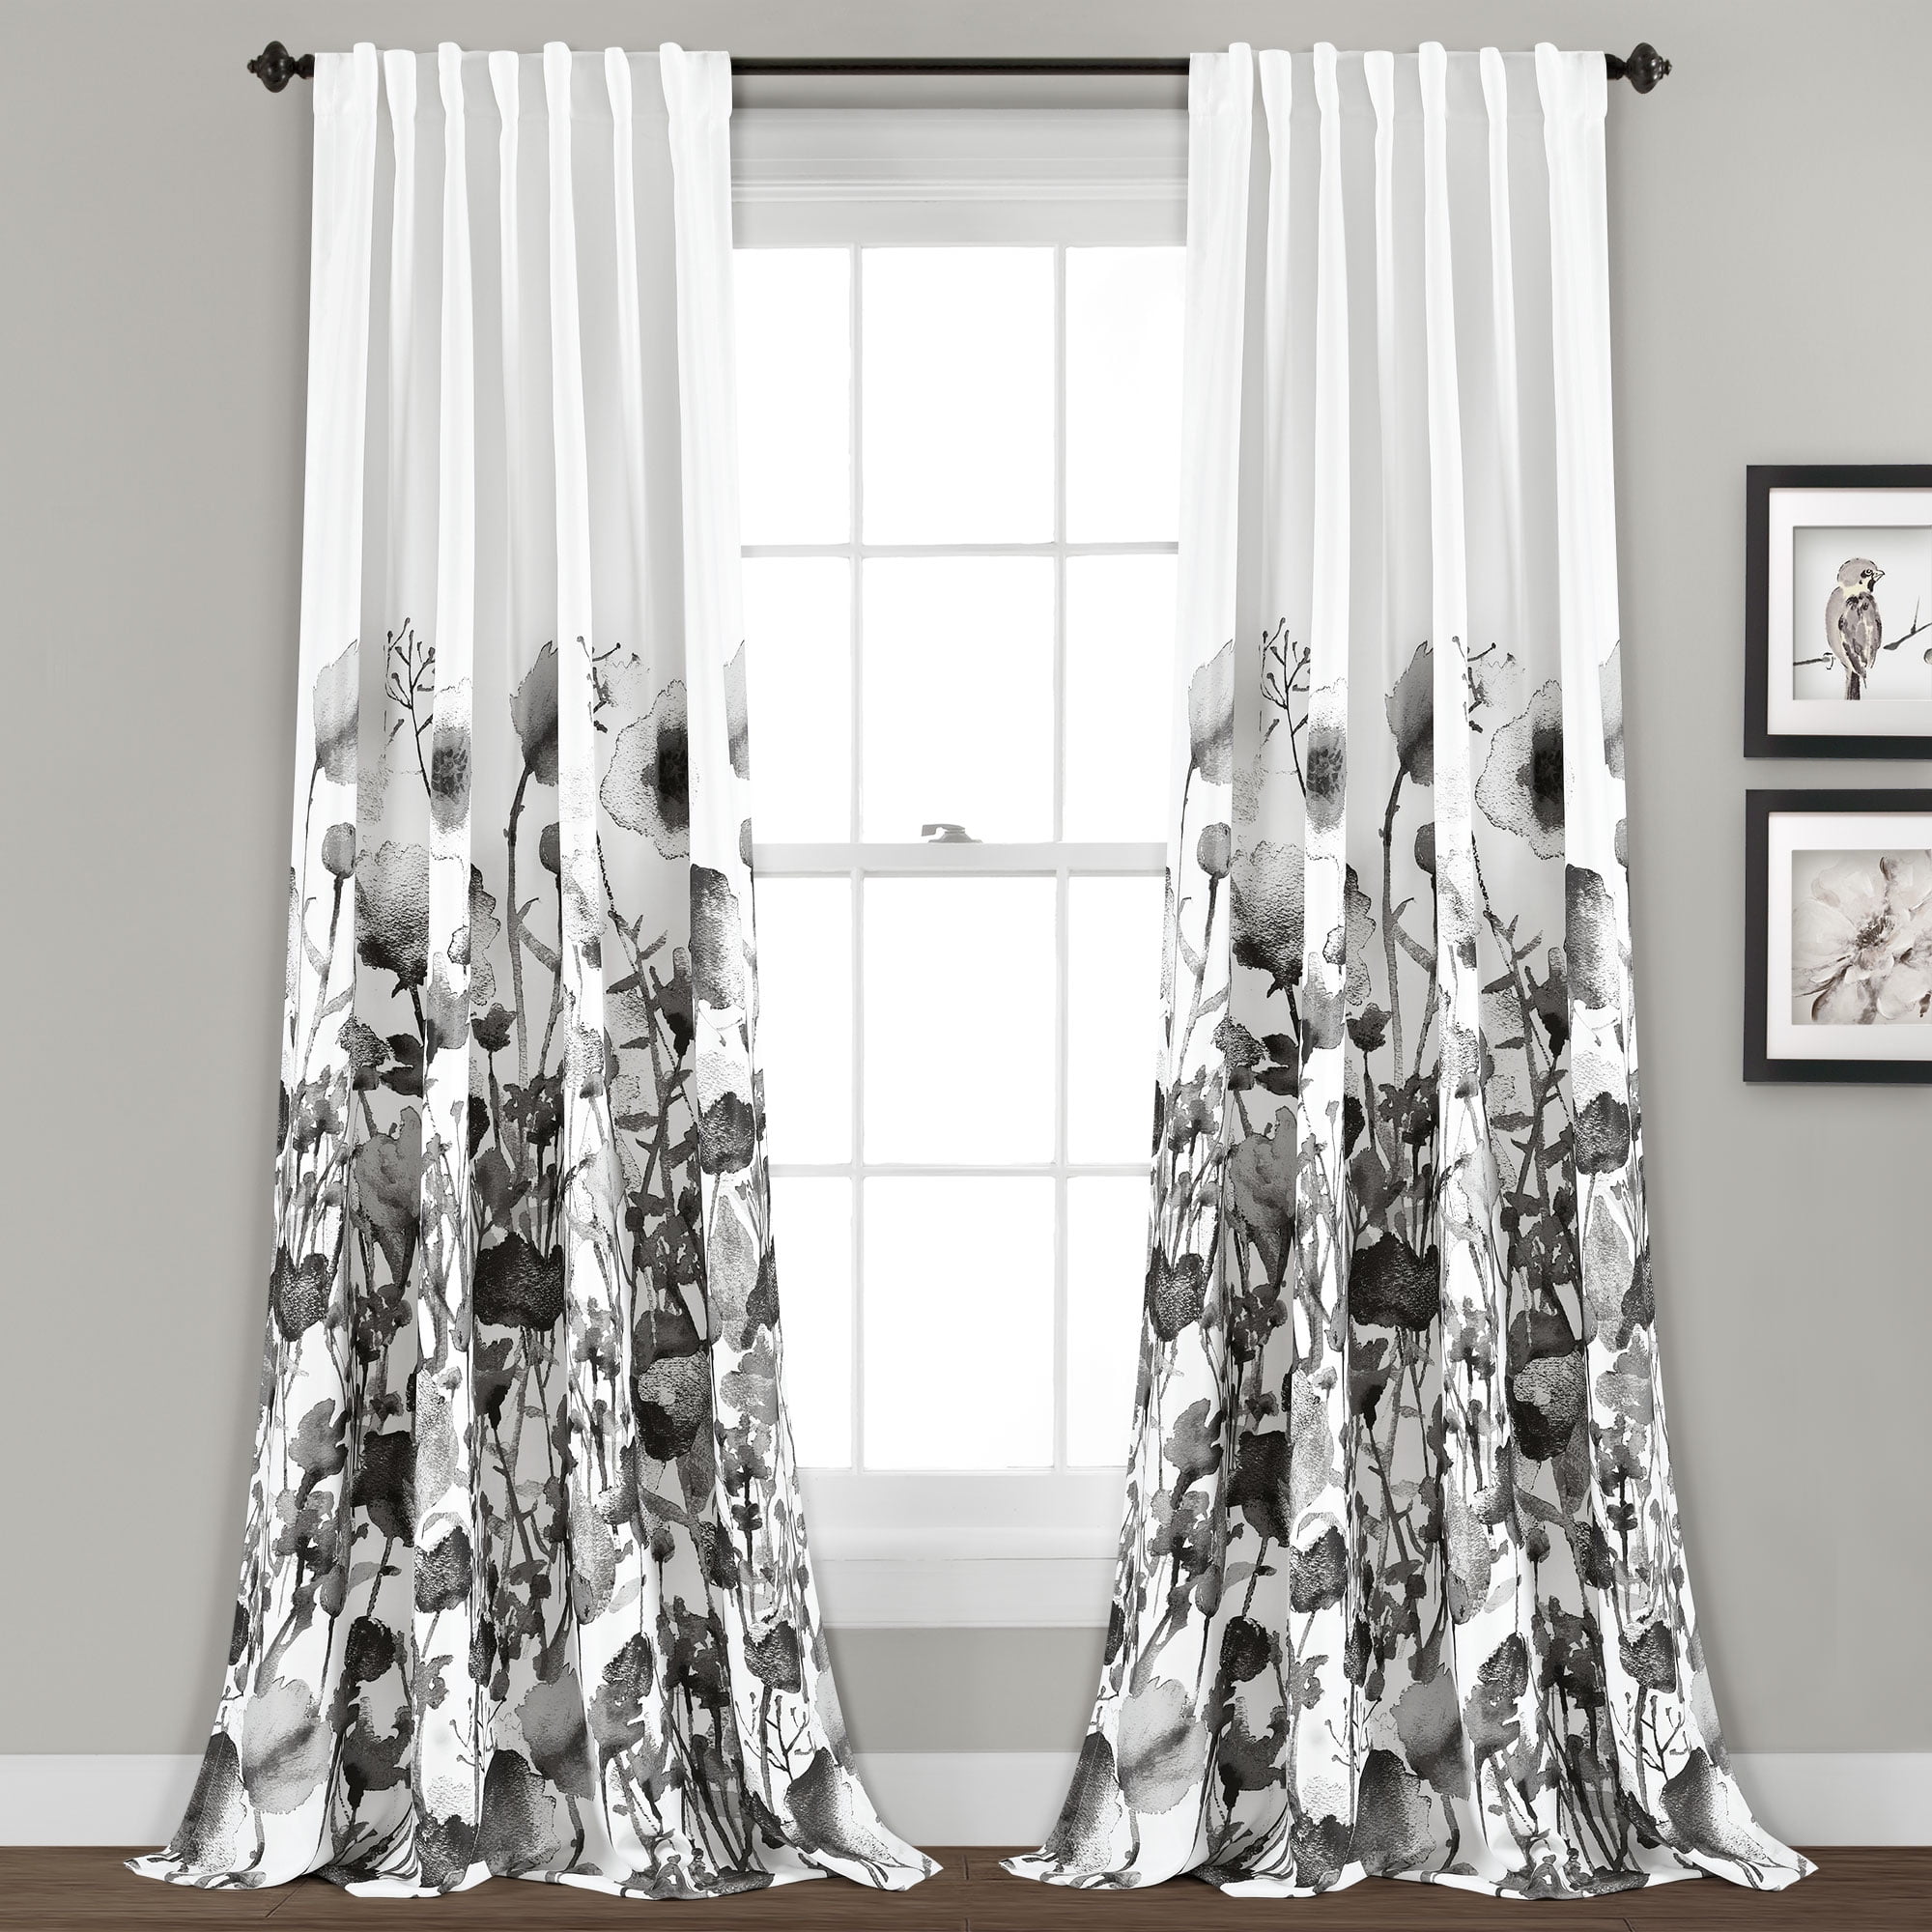 Ivory Lush Decor Rosalie Window Curtain Valance Panel Pair 84 x 52